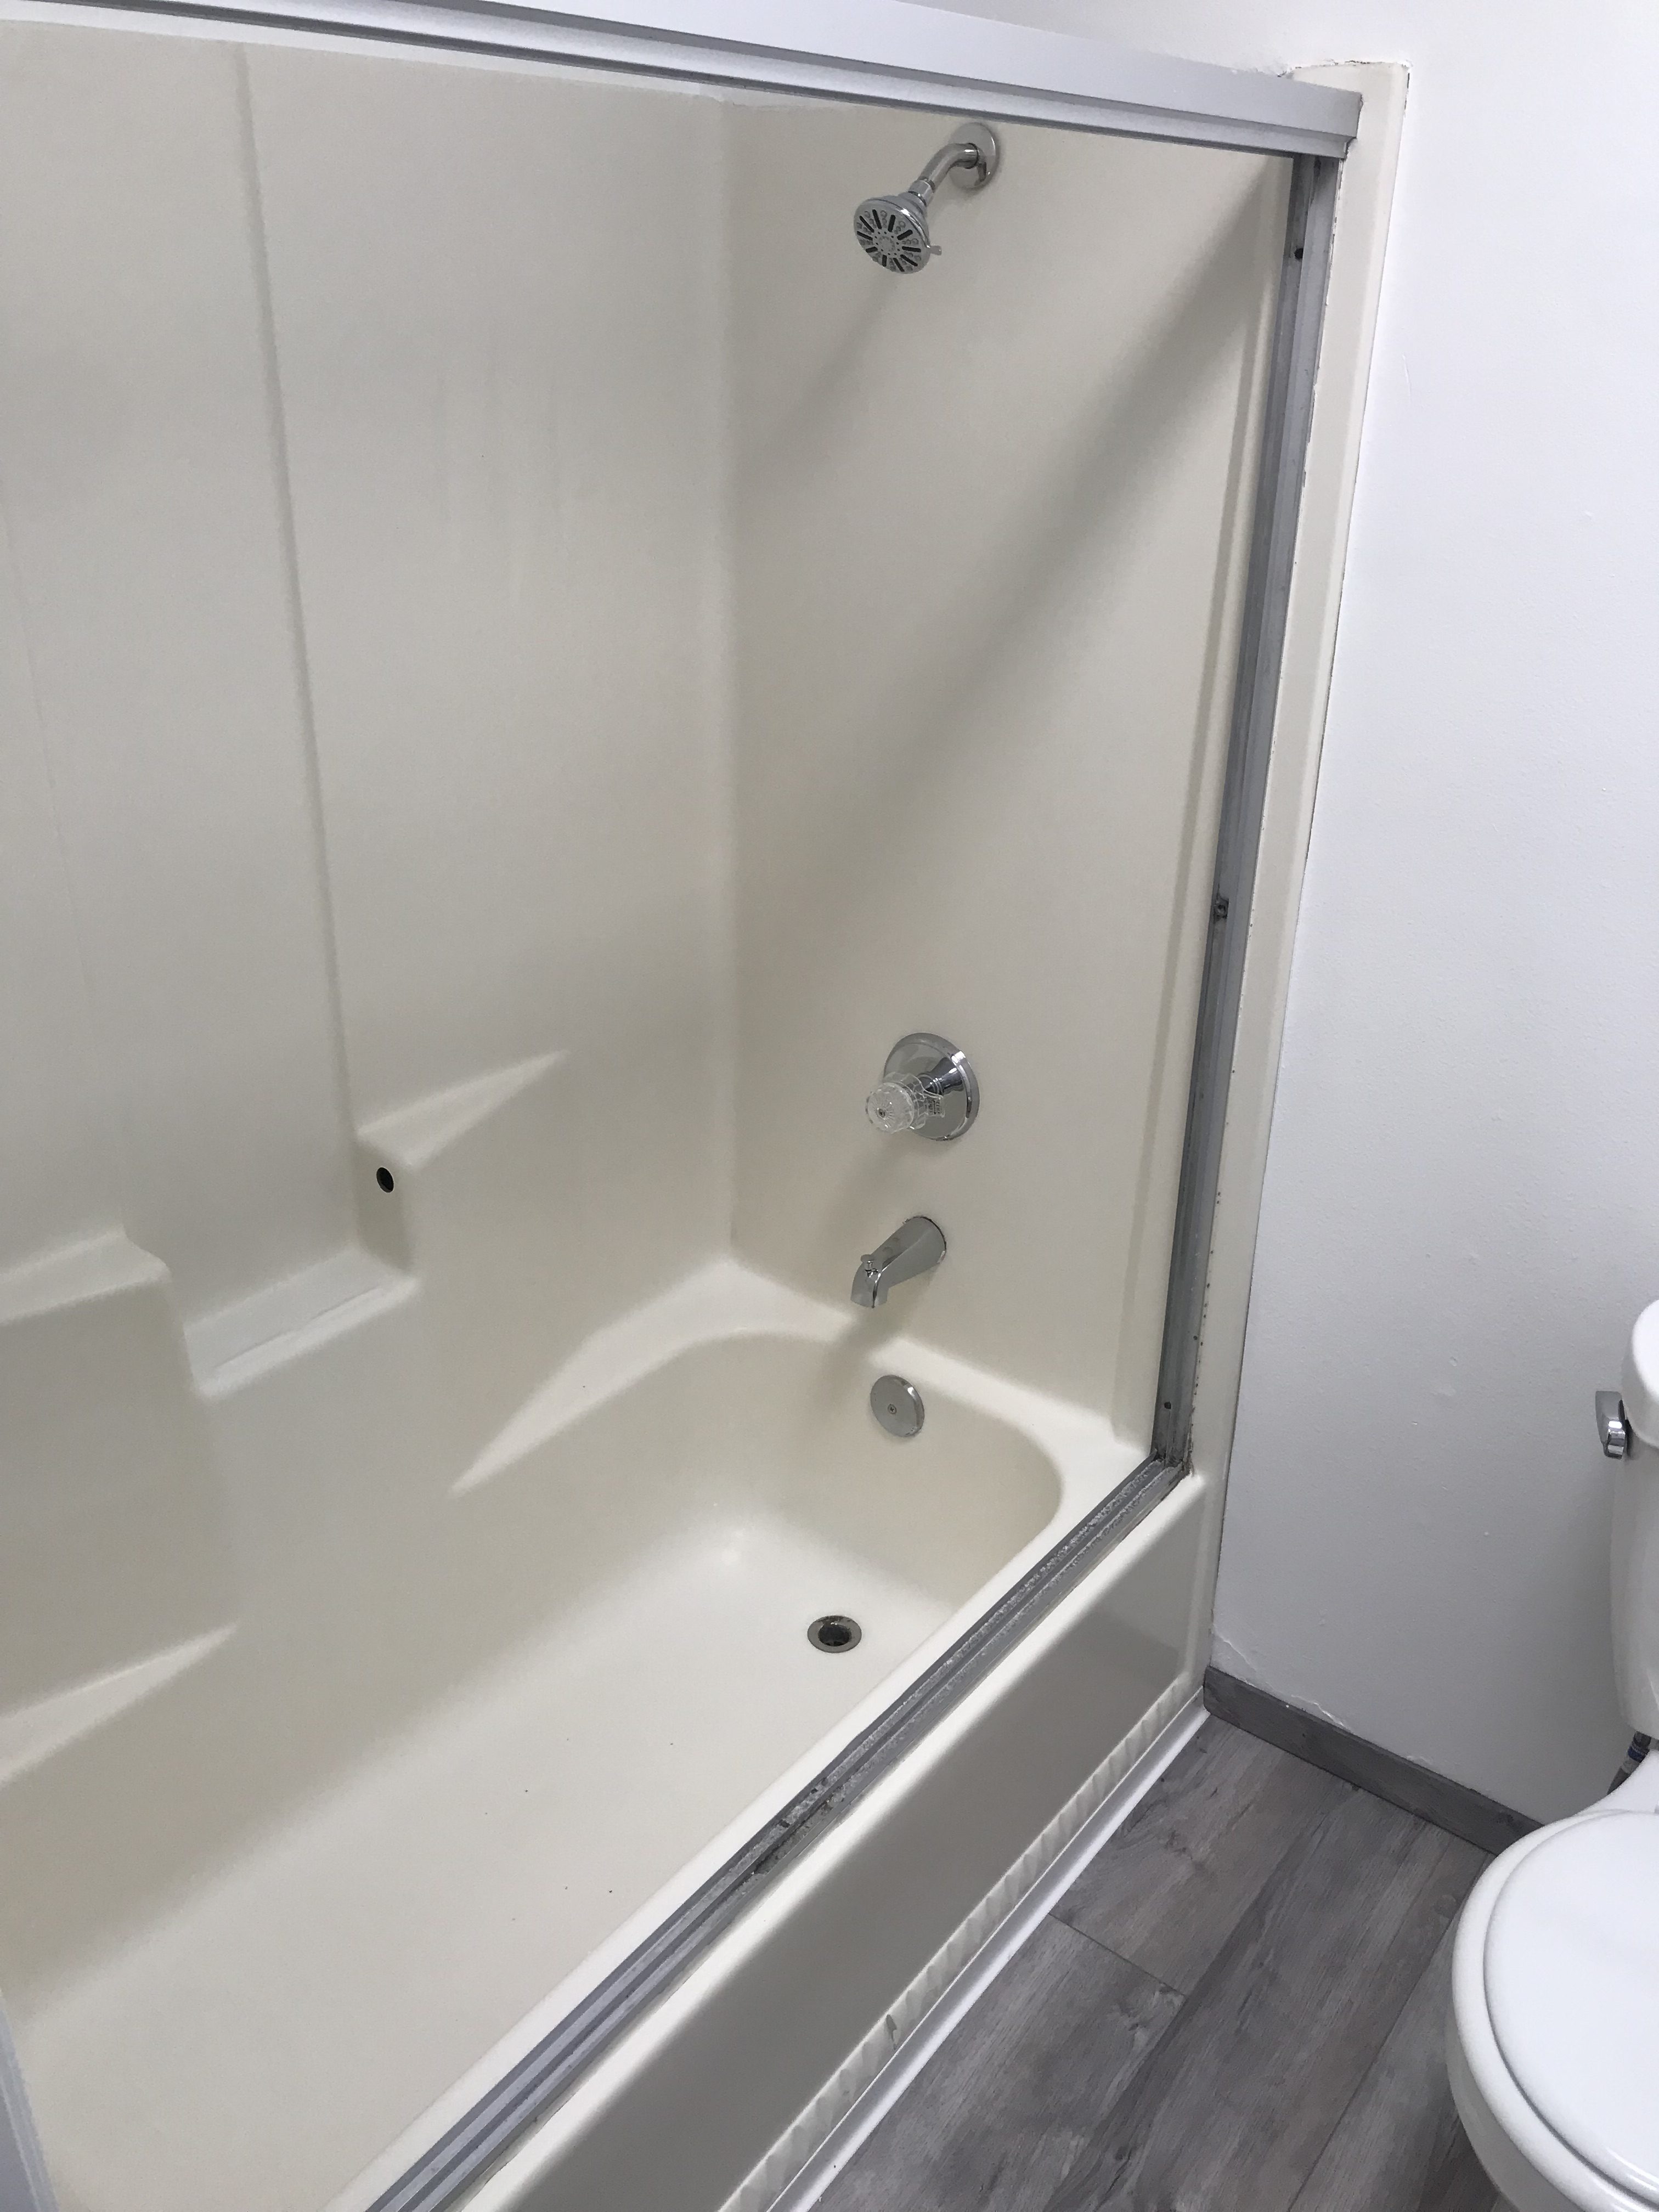 Shower stall shower resurfacing before - NuFinishPro